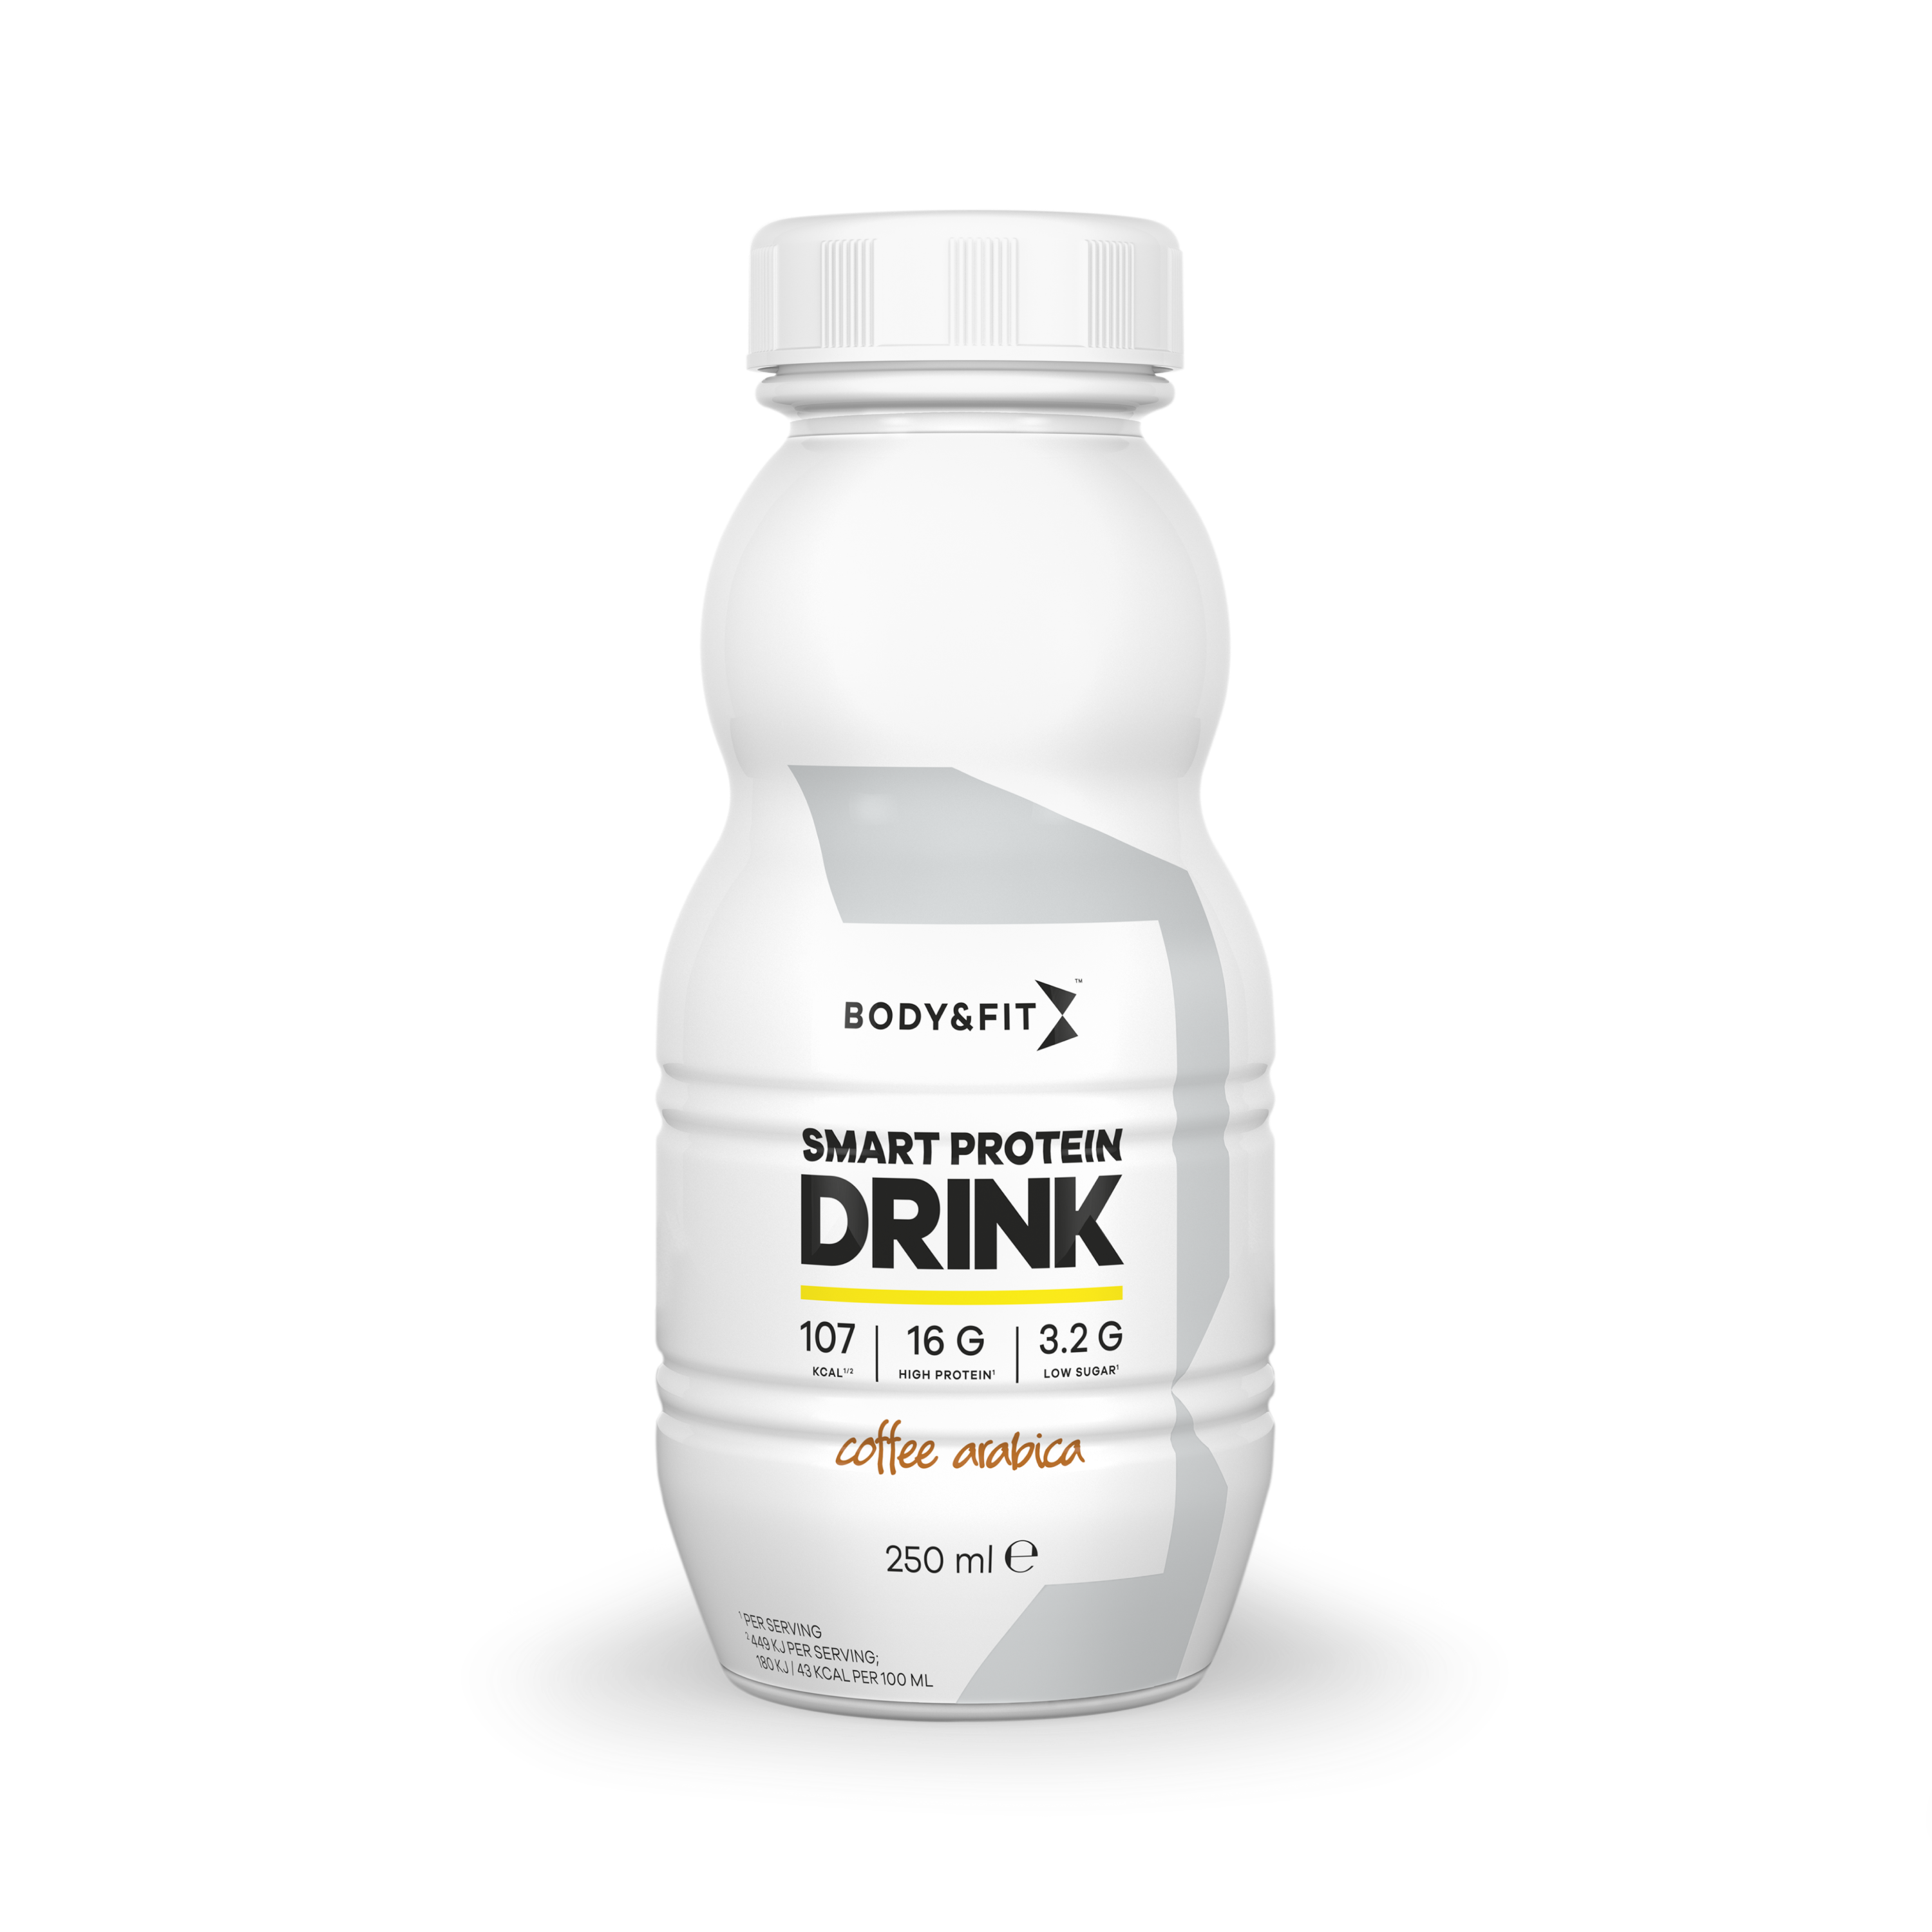 Body & Fit Smart Protein Drinks - Sportdrank - Proteïneshake / Eiwitshake - Coffee Arabica - 1 tray (6 stuks)